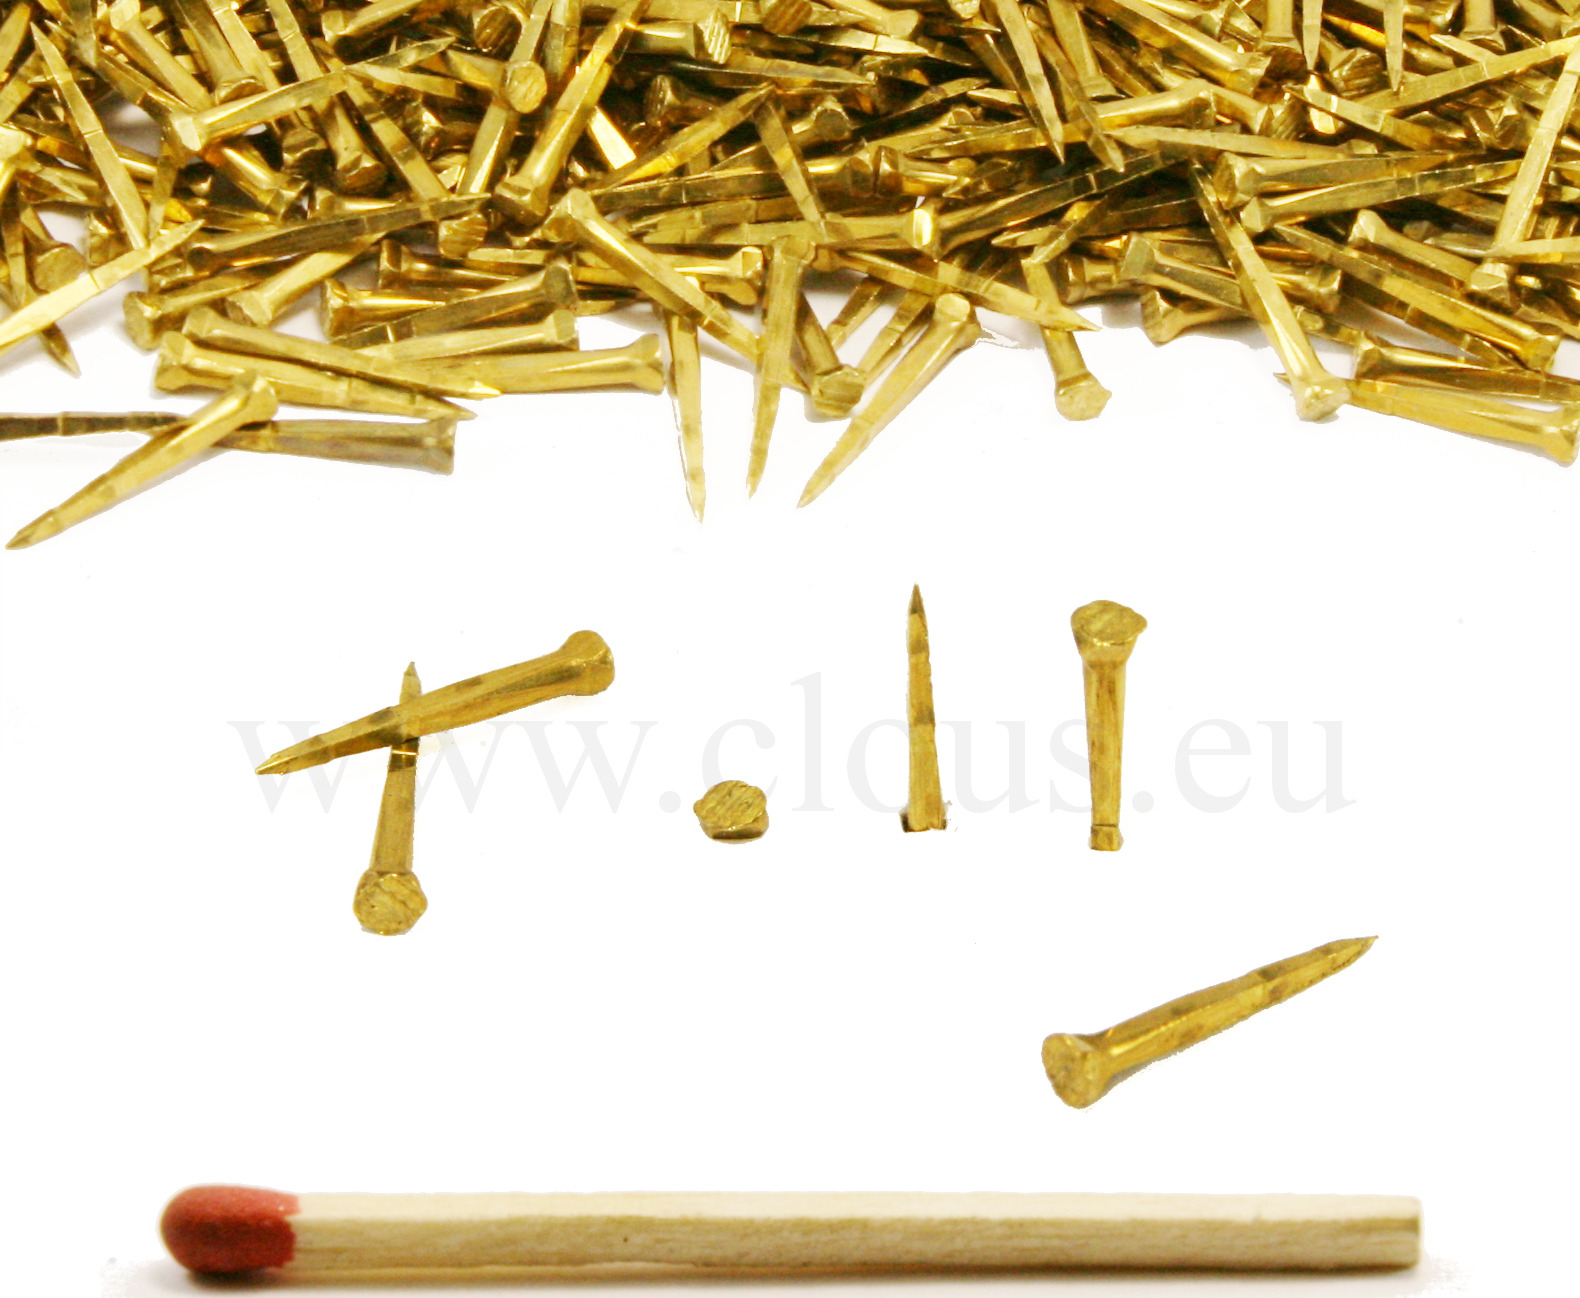 METALLIXITY Nails Tacks (4x13mm) 500pcs, Metal Hardware Nails Studs - for  Woodworking, Furniture, Shoes, Conveyor Belt Repair - Amazon.com